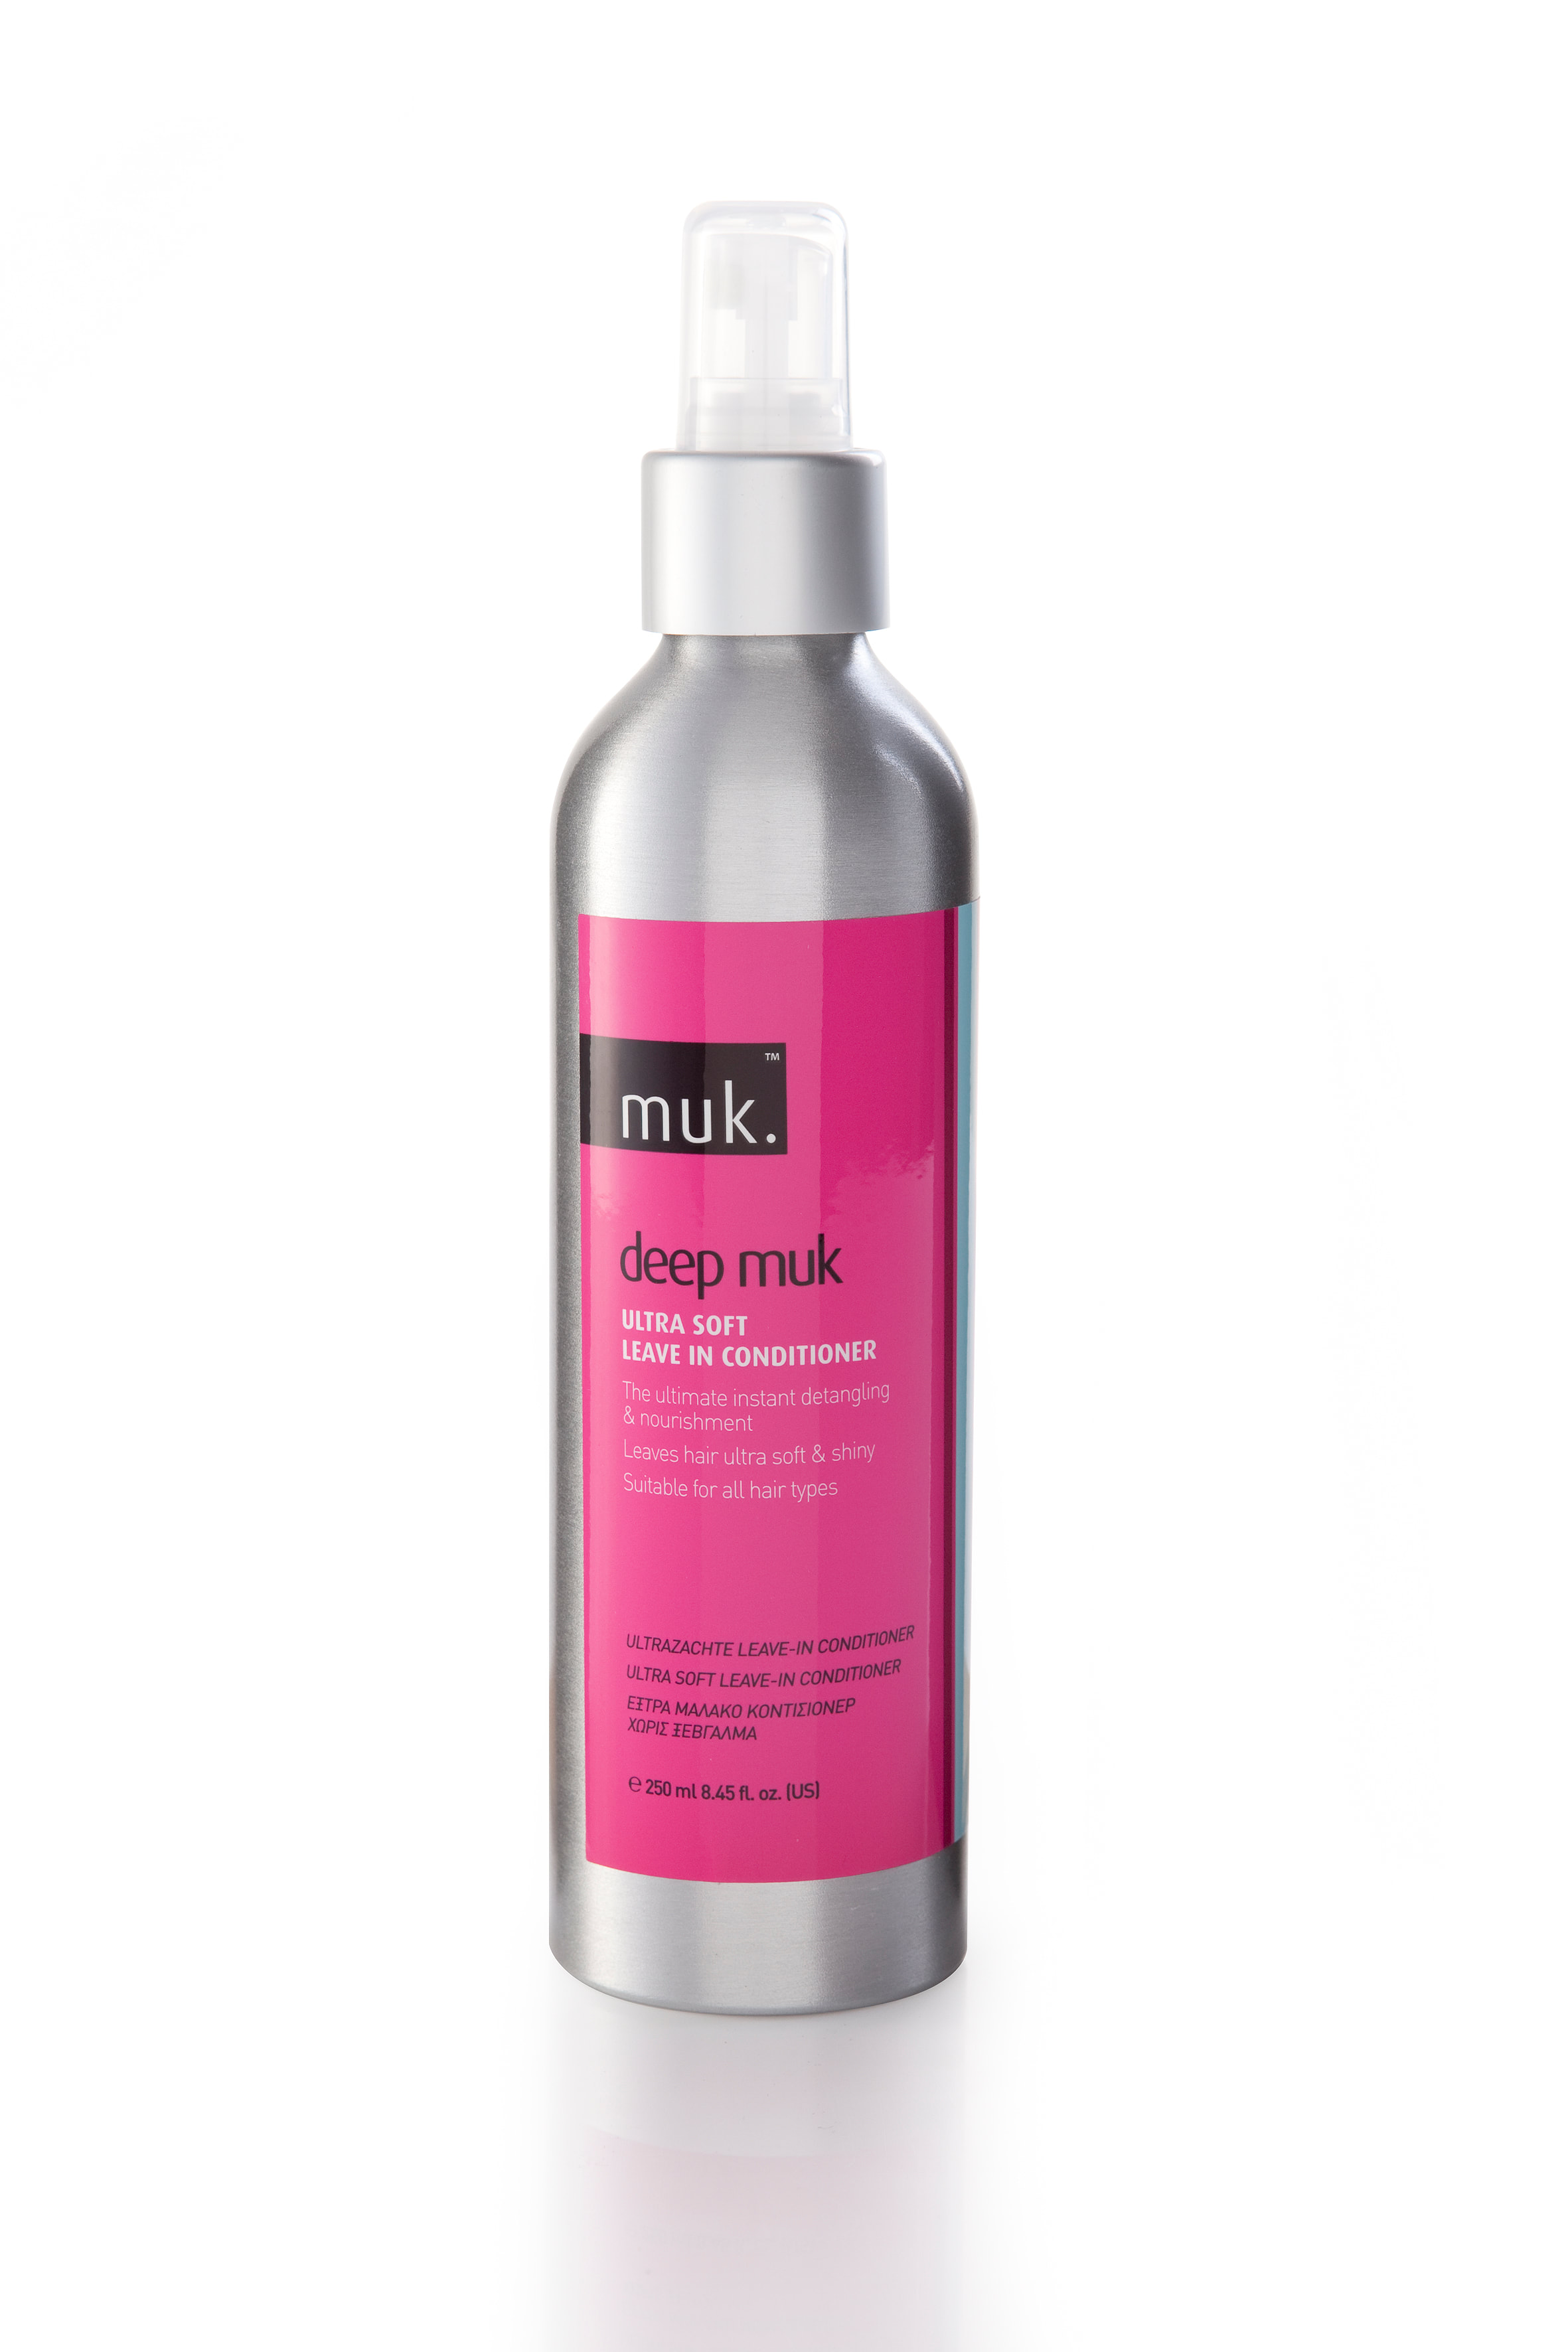 MUK Ultrasoft Leave in Conditioner | Evolve Hair Busselton